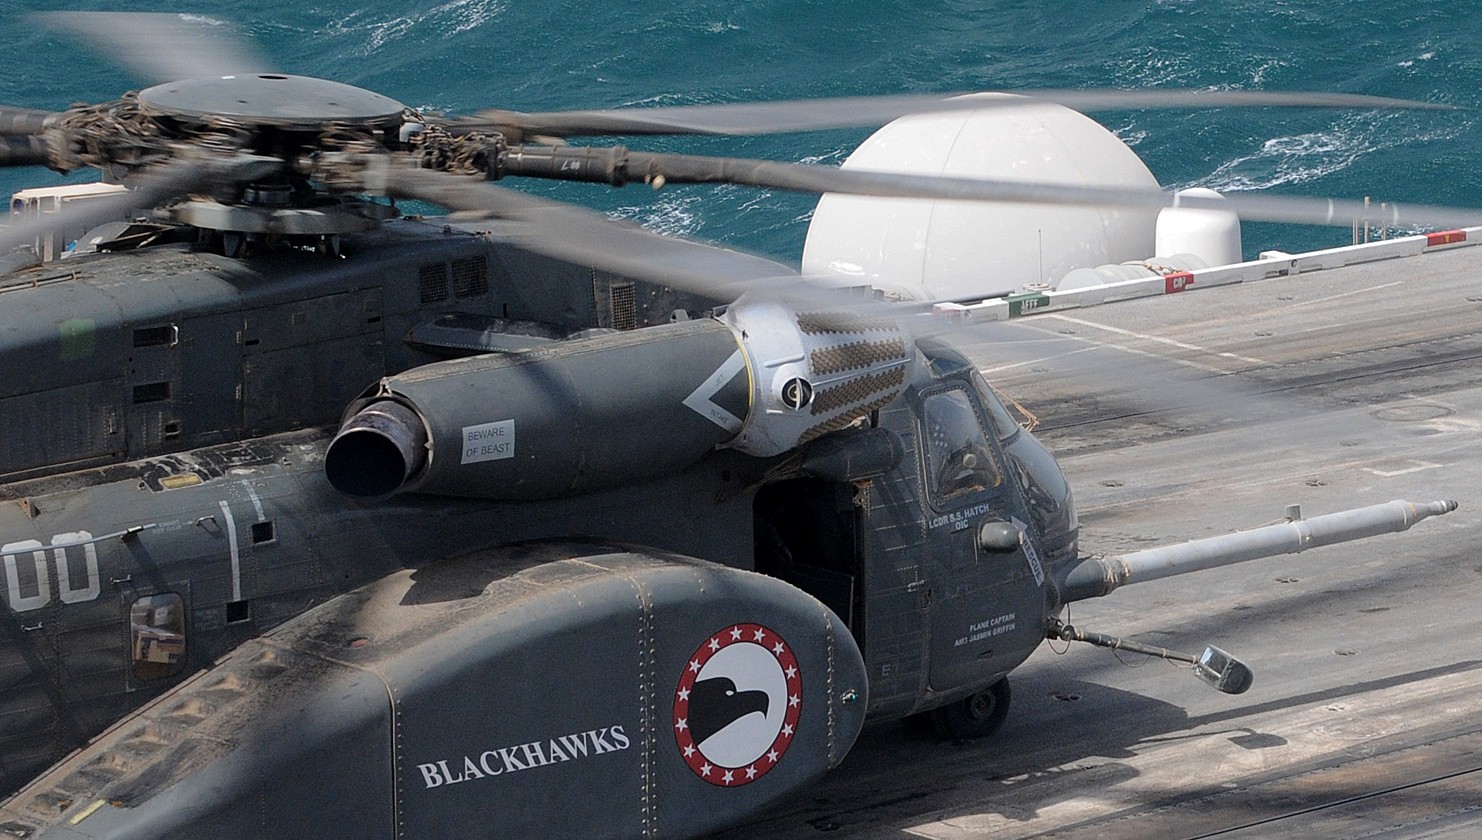 hm-15 blackhawks helicopter mine countermeasures squadron navy mh-53e sea dragon 48 uss abraham lincoln cvn-72